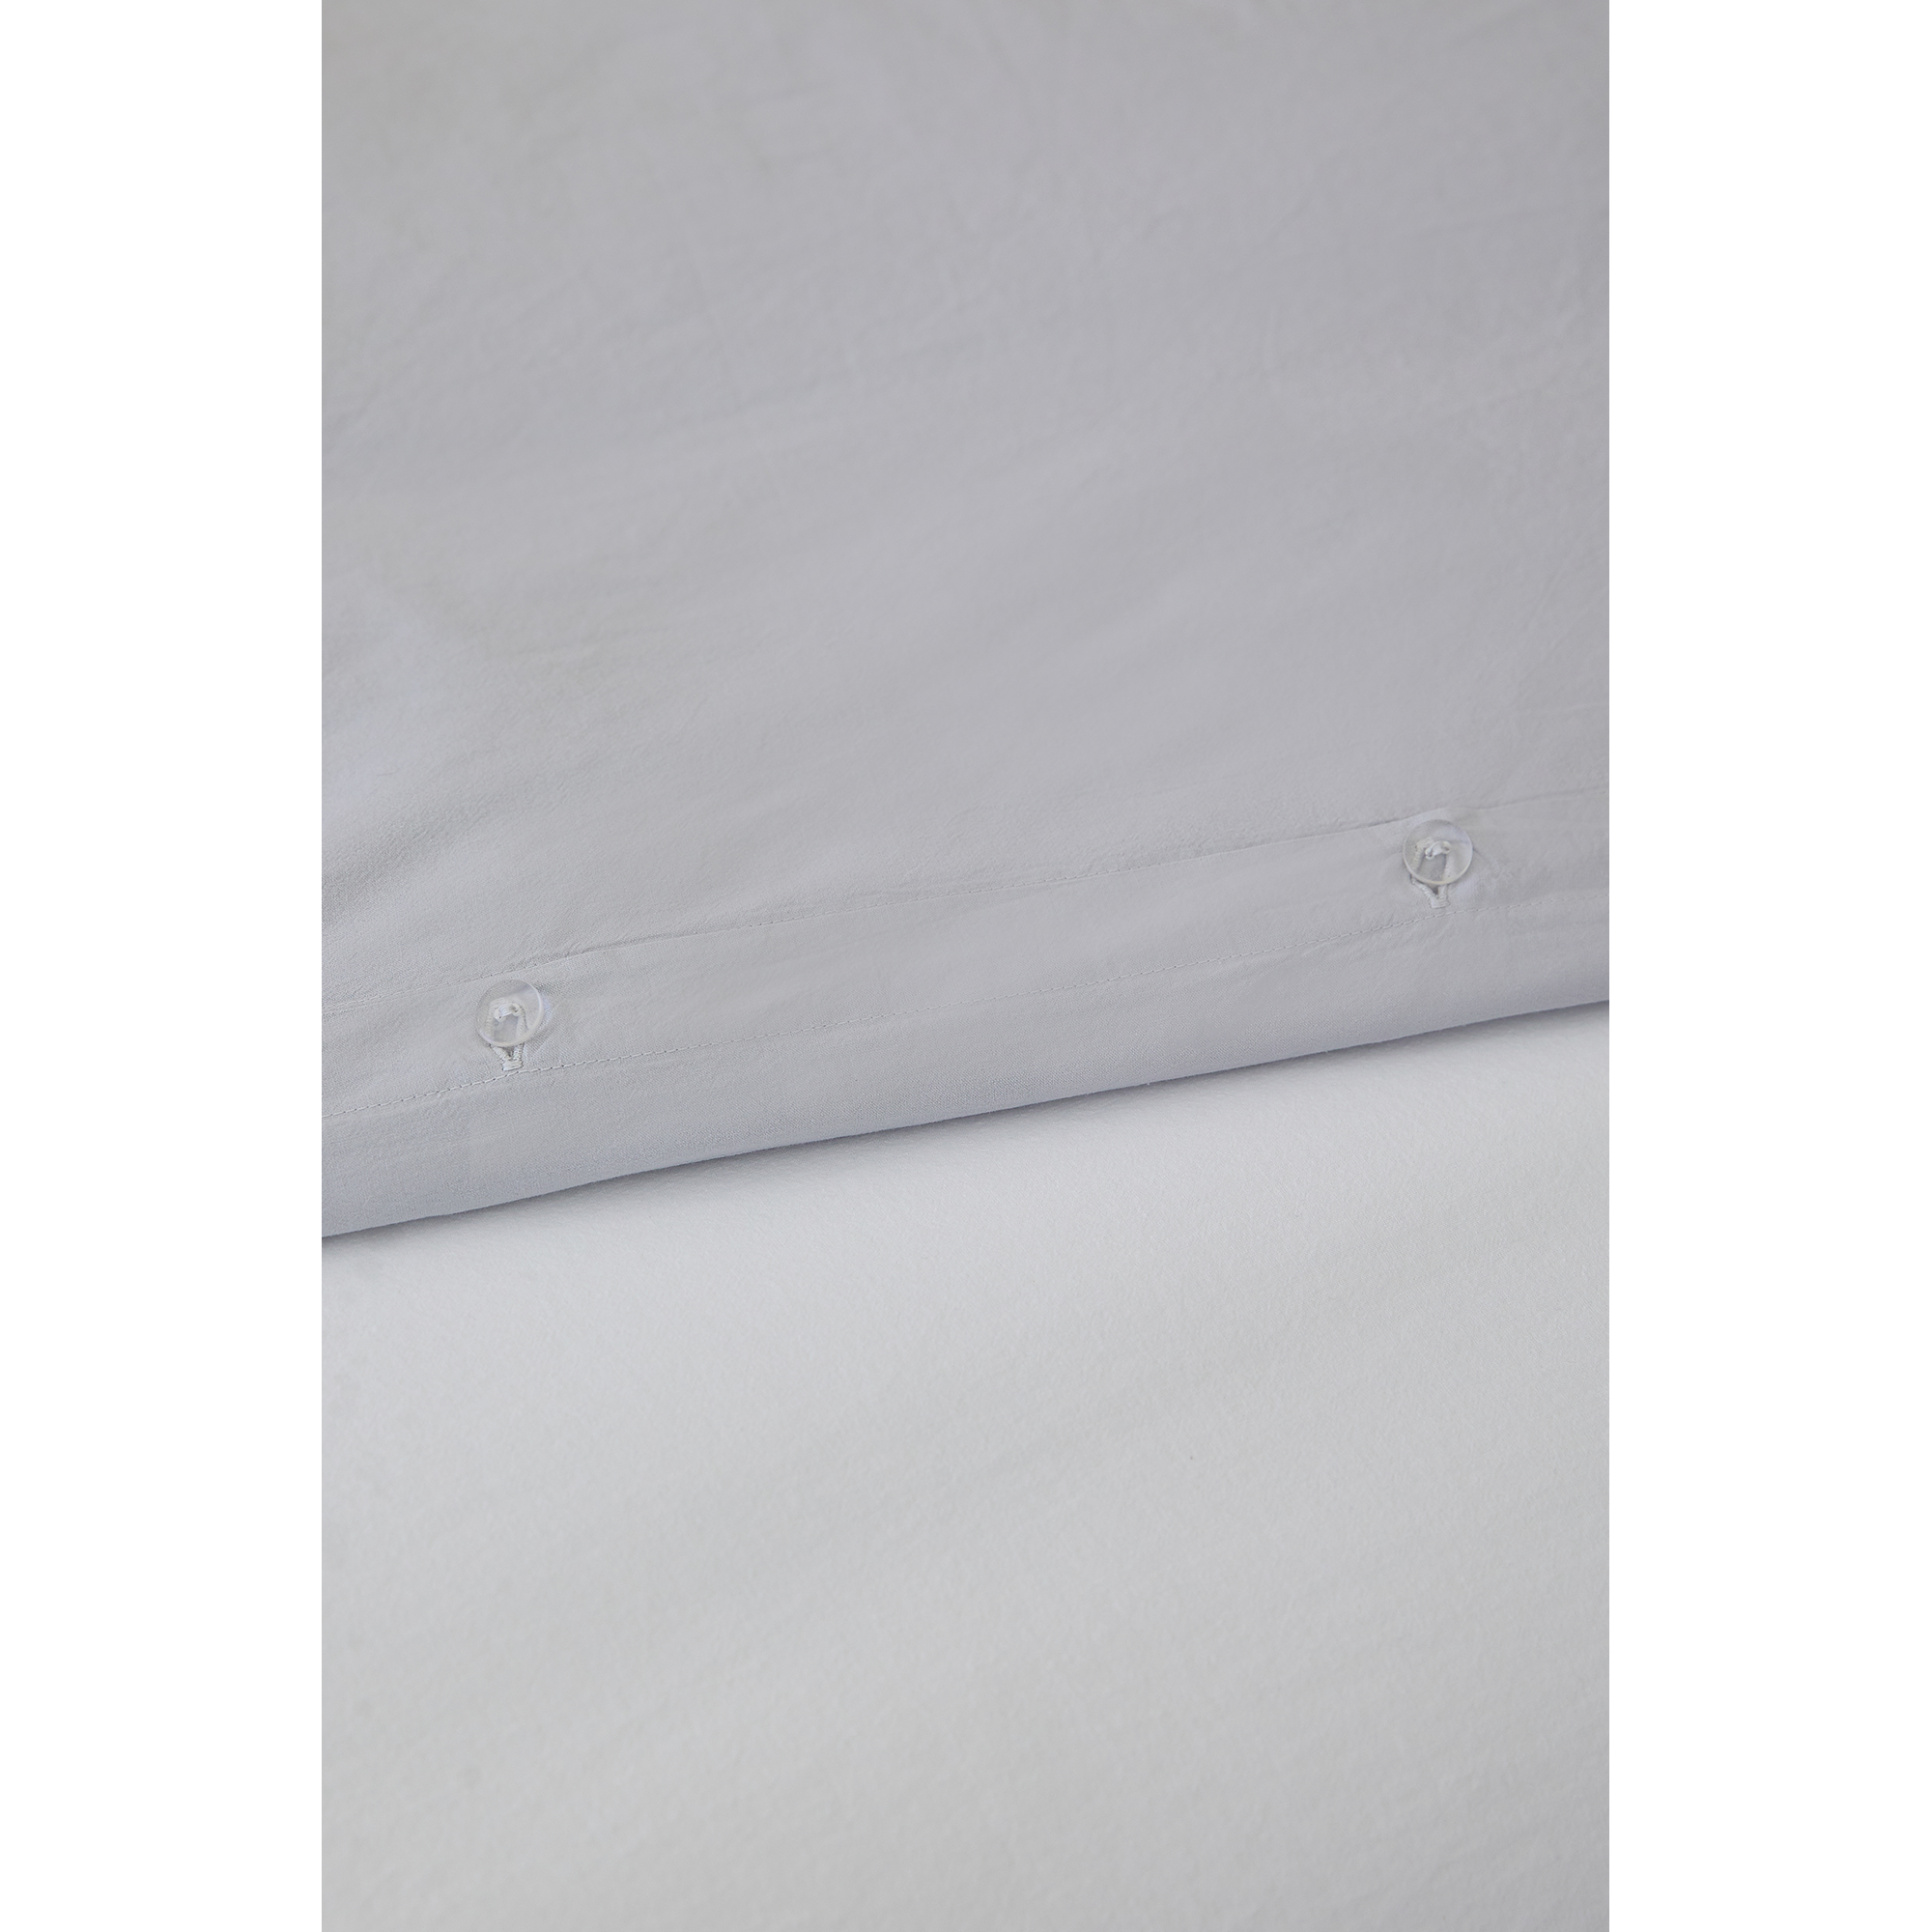 Torres Novas 1845 Duvet cover Silver gray - Lits Jumeaux - 240 x 220 cm (without pillowcases) - Washed Cotton